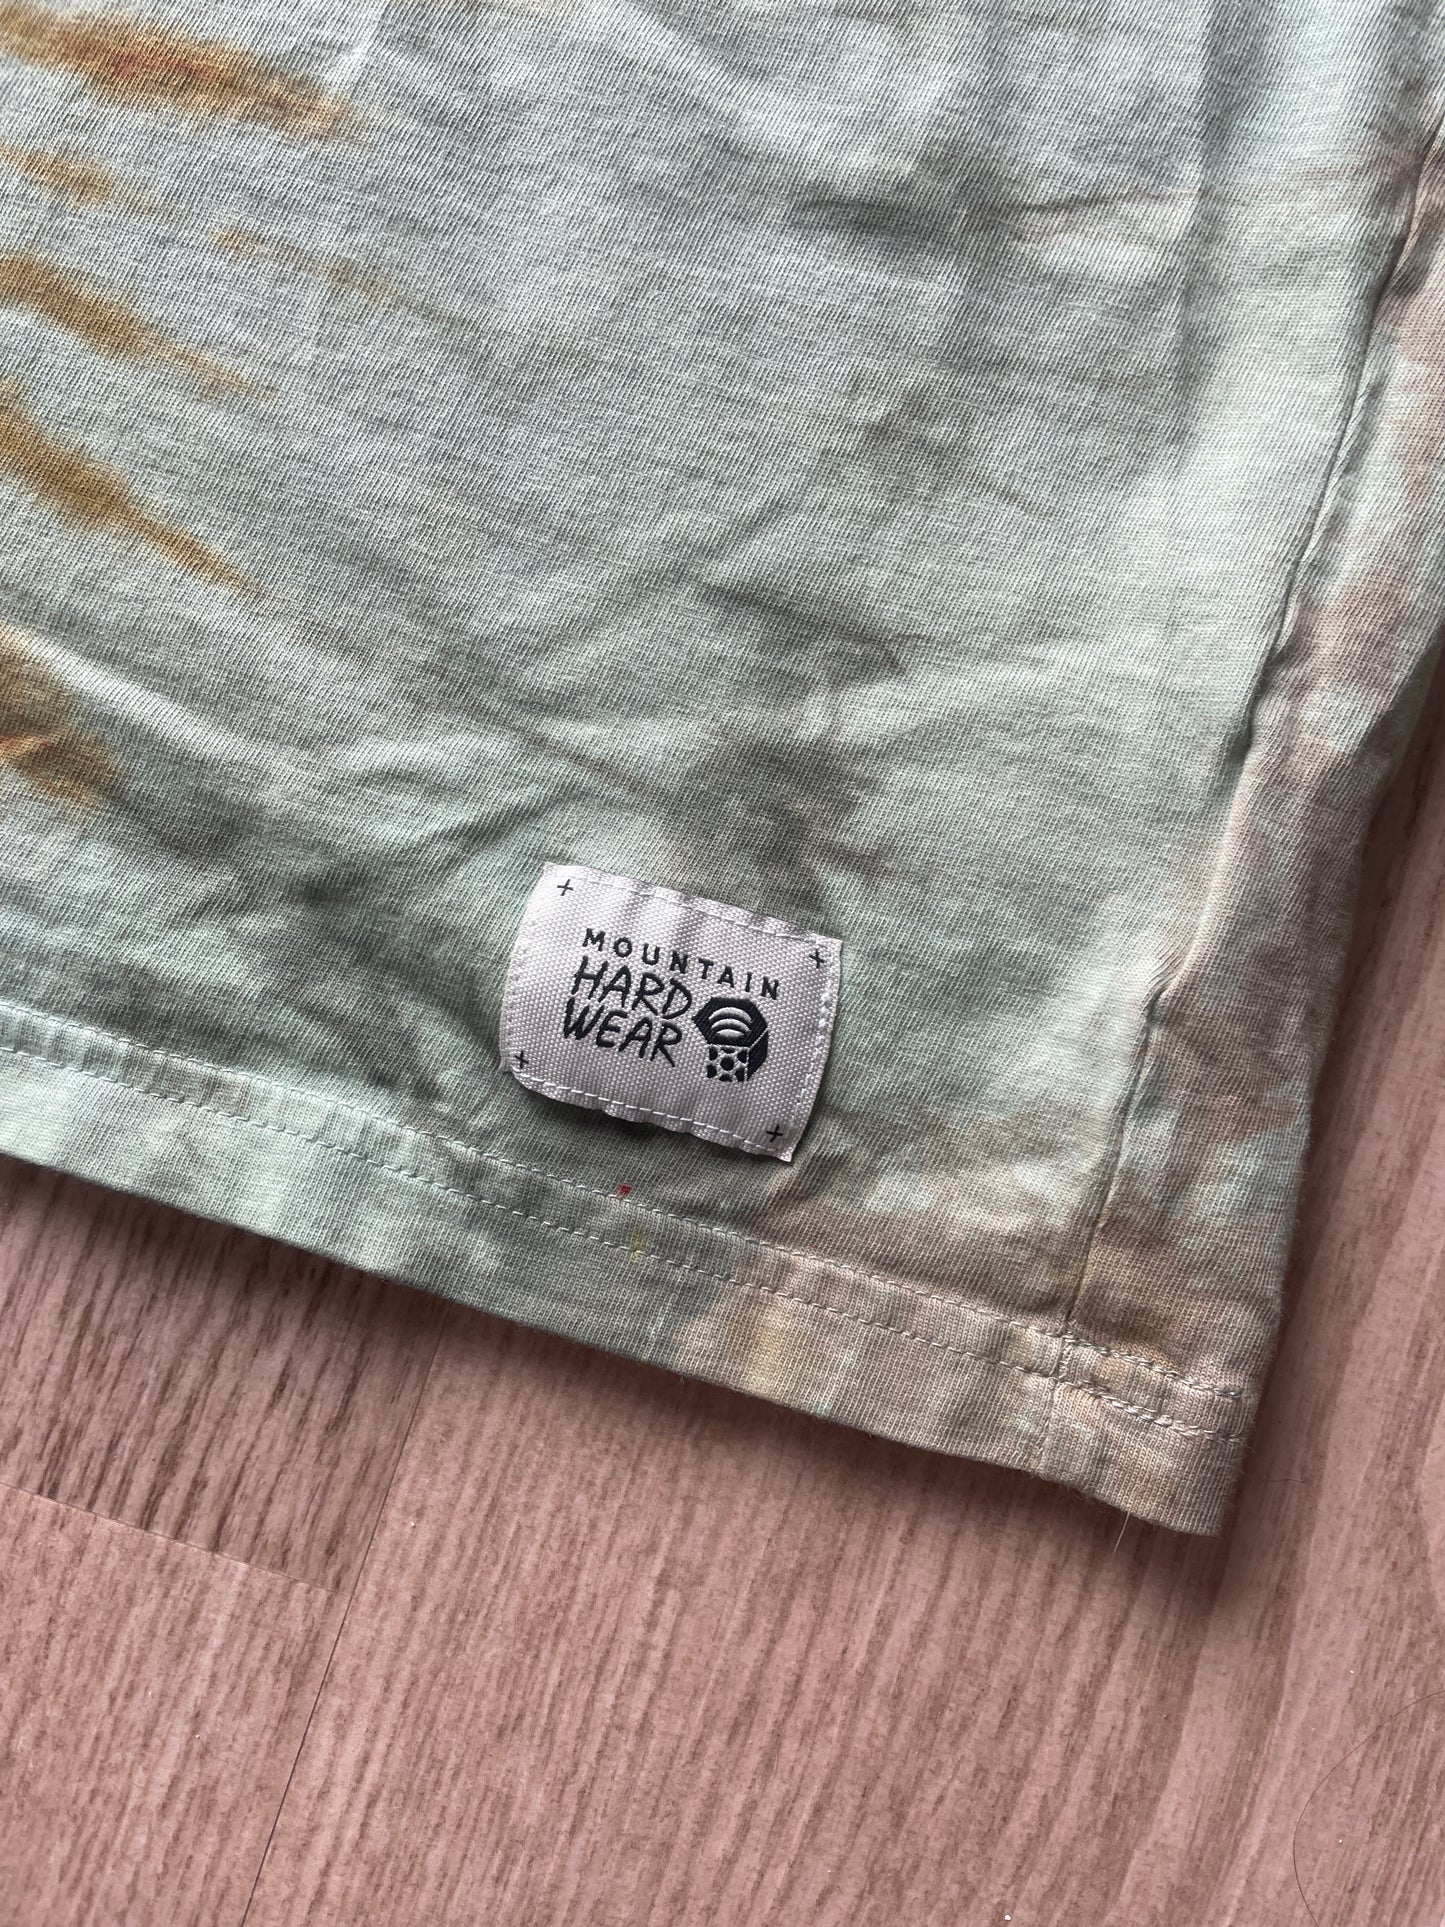 XS Men’s Mountain Hardwear Keep Earth Awesome Handmade Tie Dye Tank Top | One-Of-a-Kind Green Earth Tones Short Sleeve